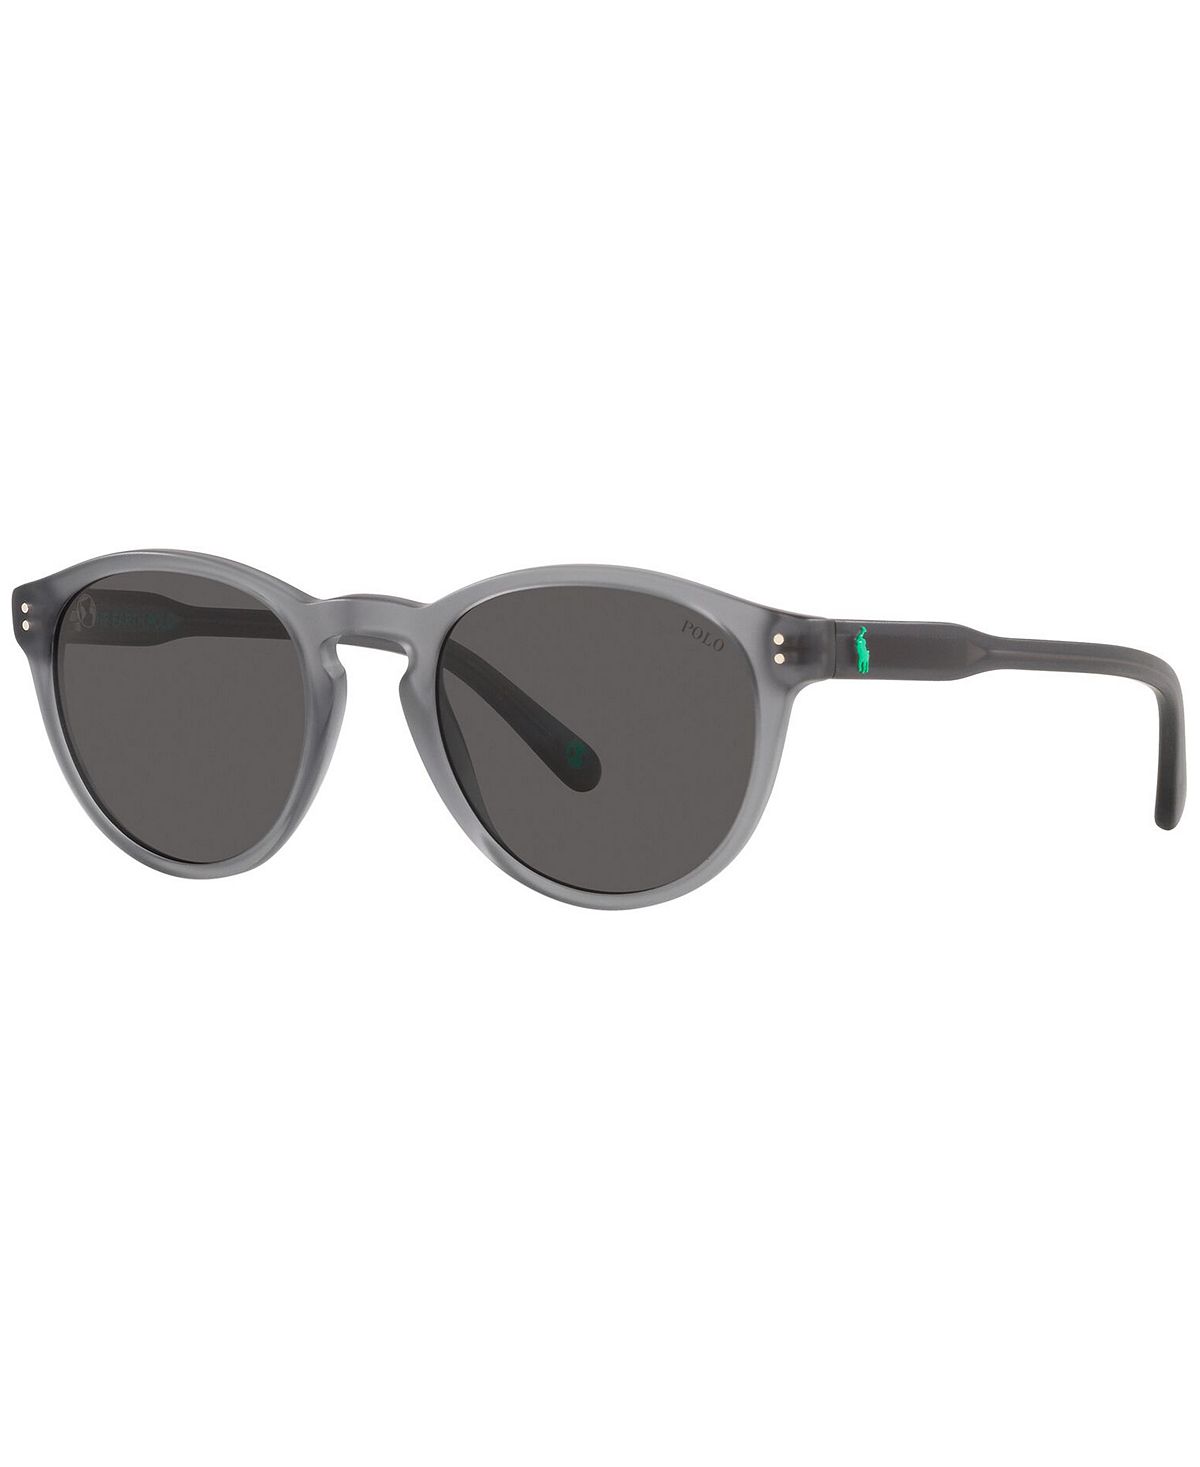 Мужские солнцезащитные очки, PH4172 50 Polo Ralph Lauren носки levante dark grey